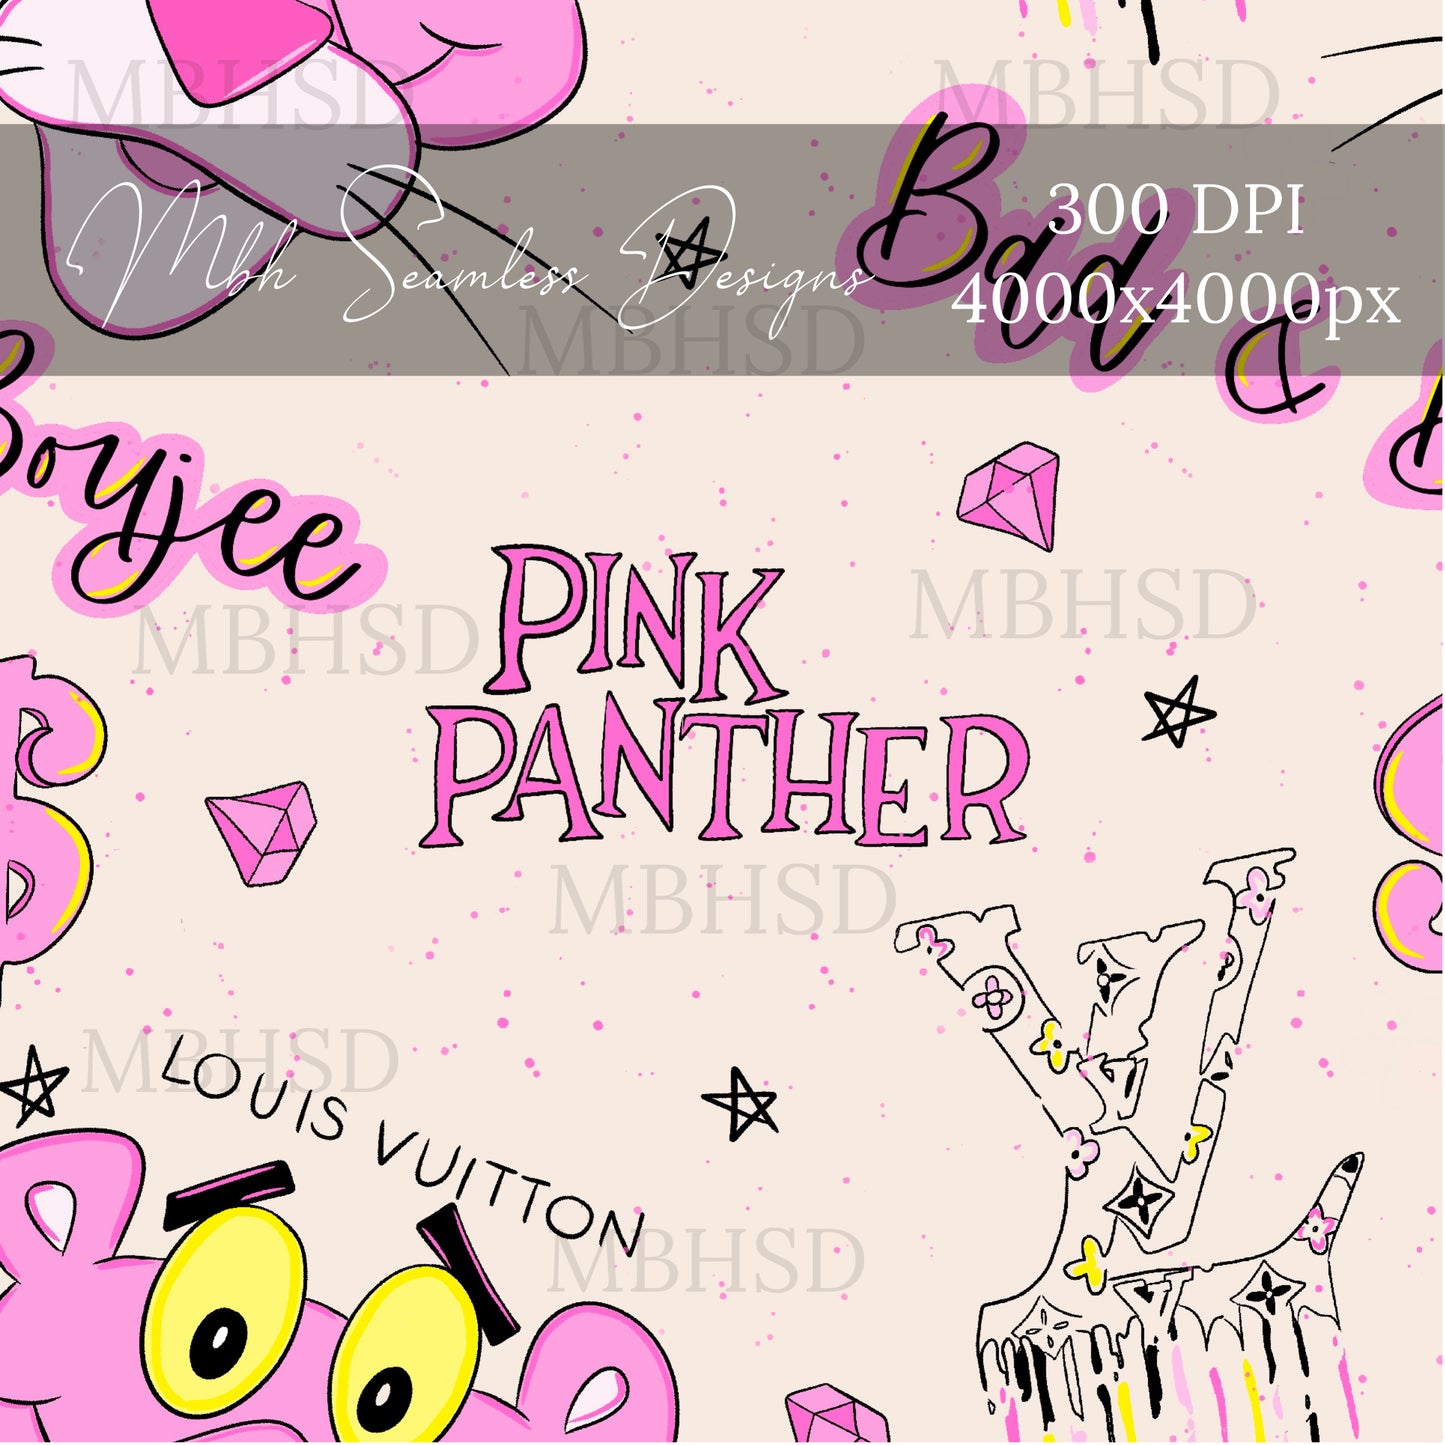 Boujee Pink Panther Seamless Pattern